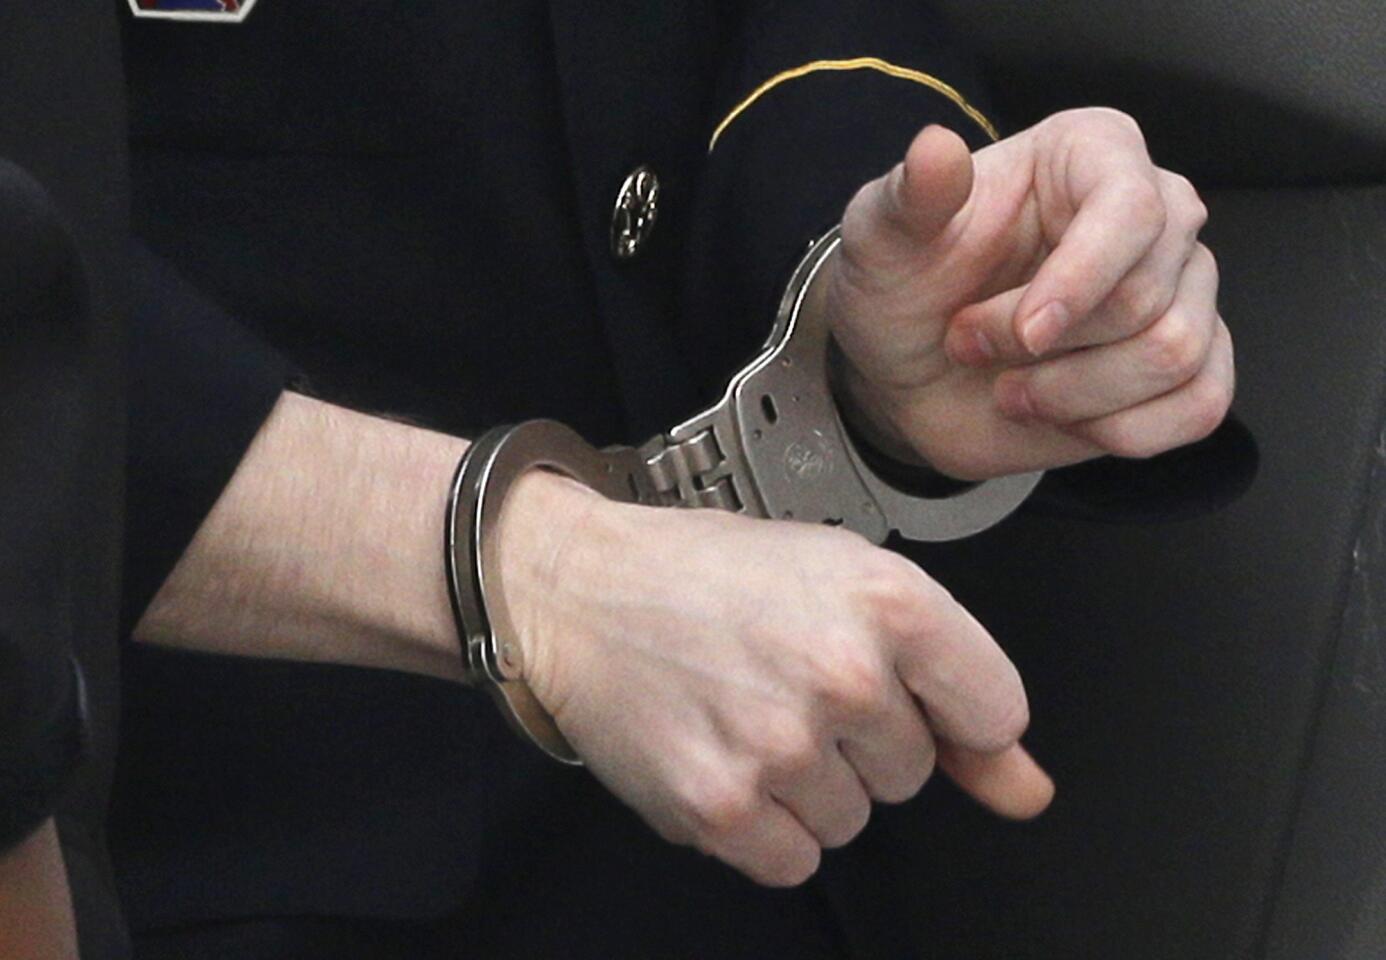 Manning handcuffed